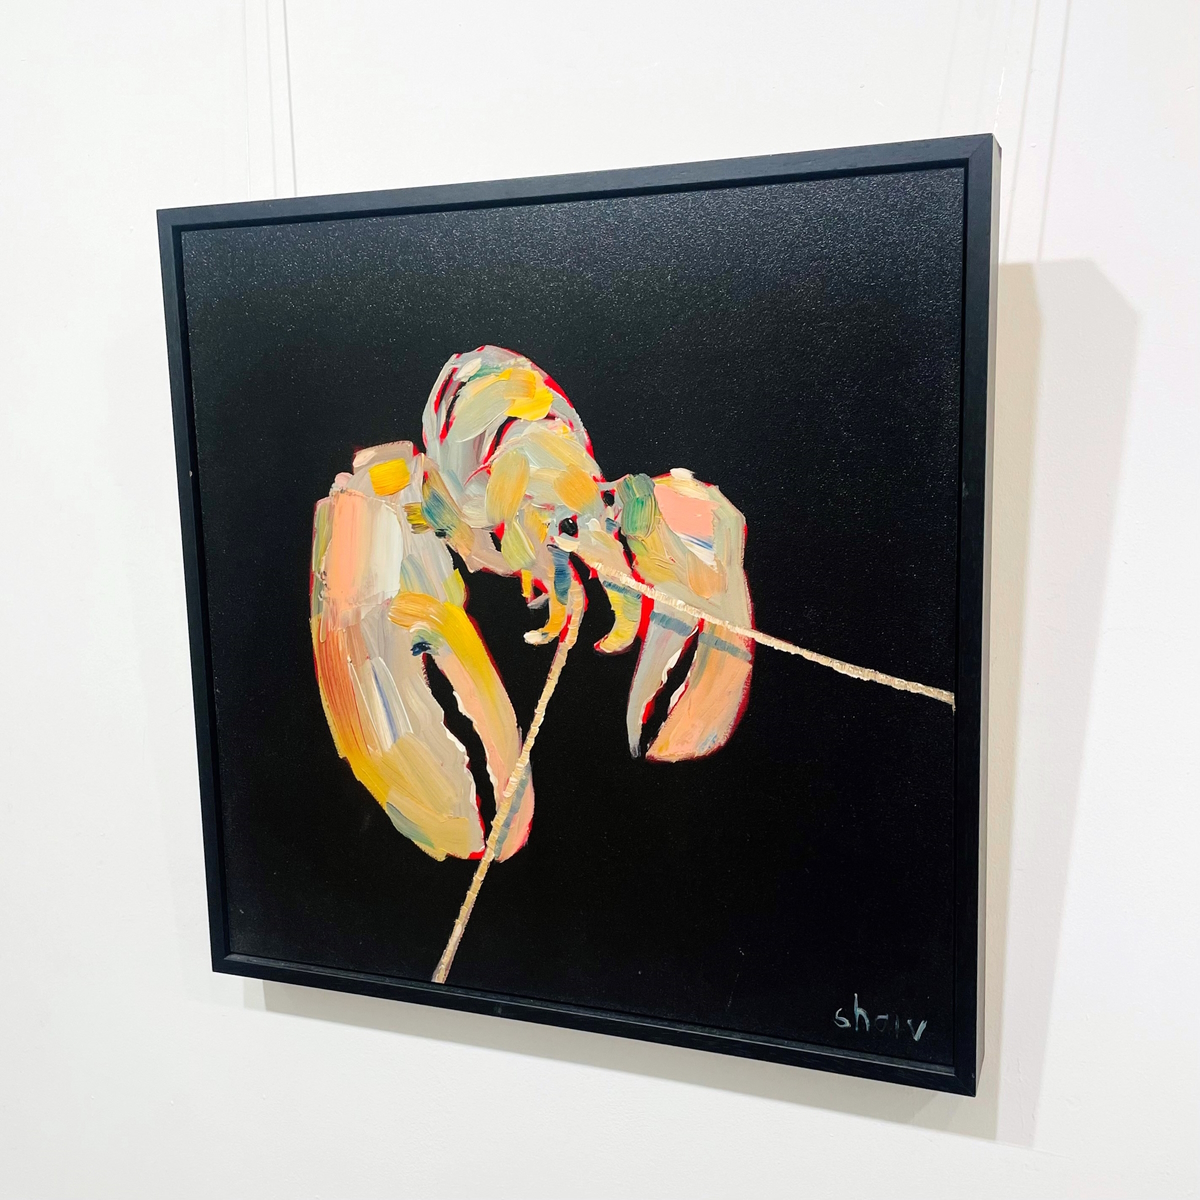 'Deep Sea Lobster' by artist Rob Shaw